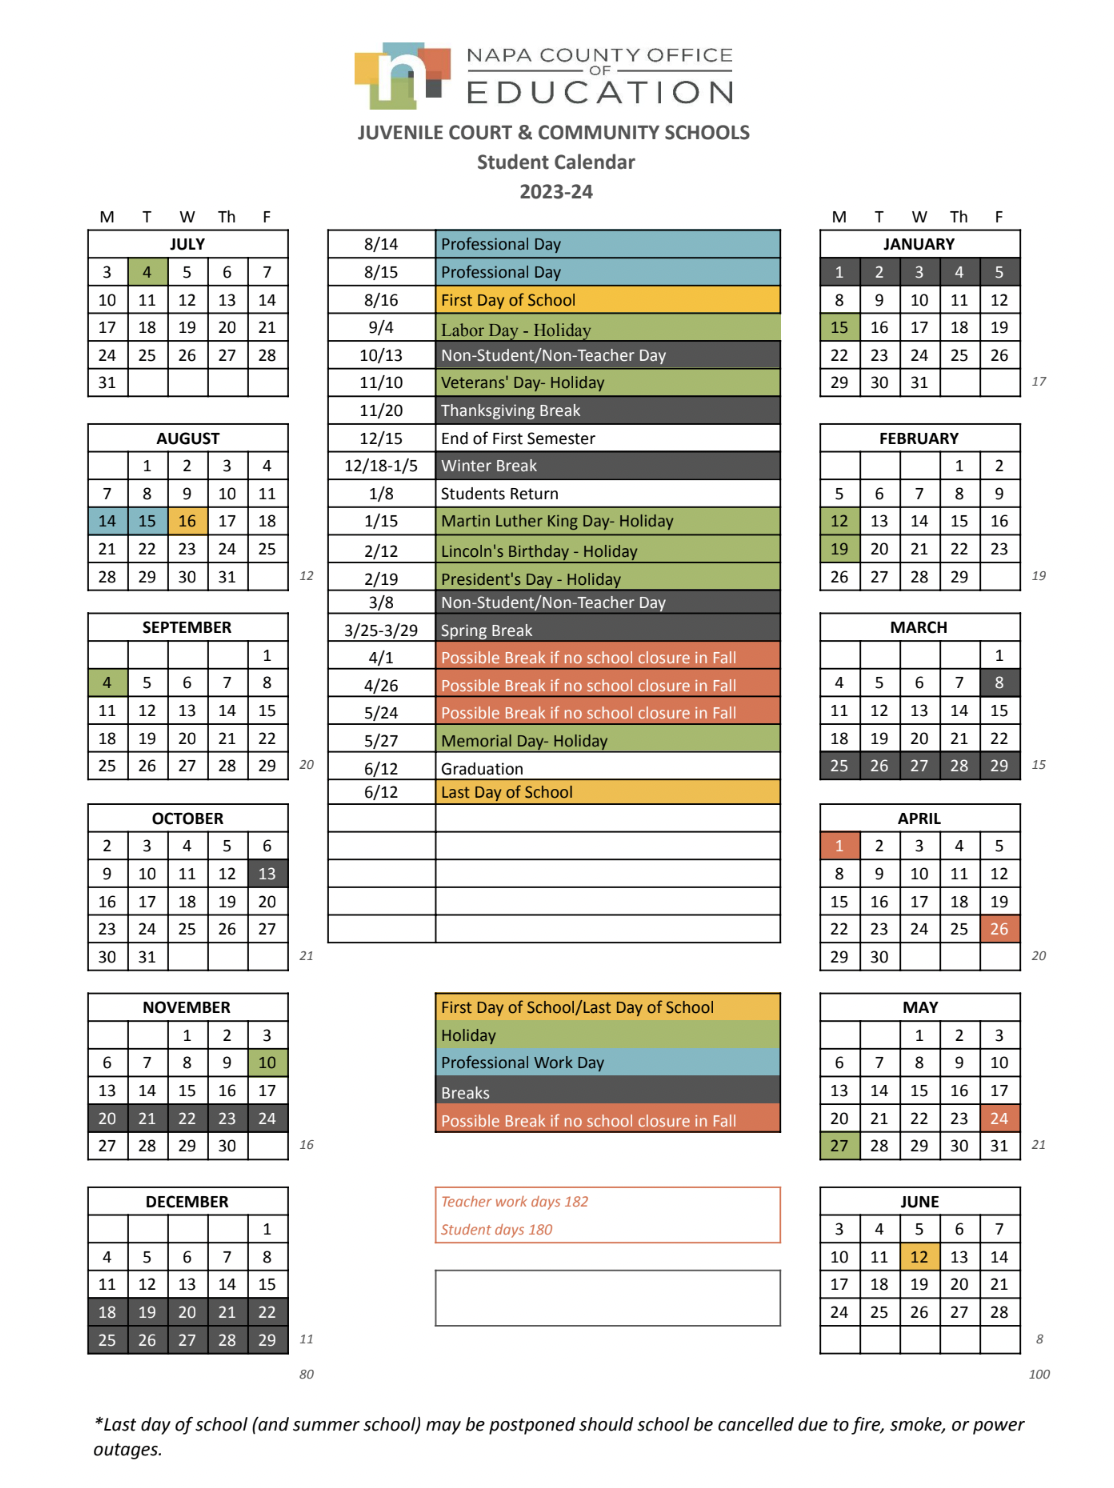 Camille Creek Juvenile Court Calendar